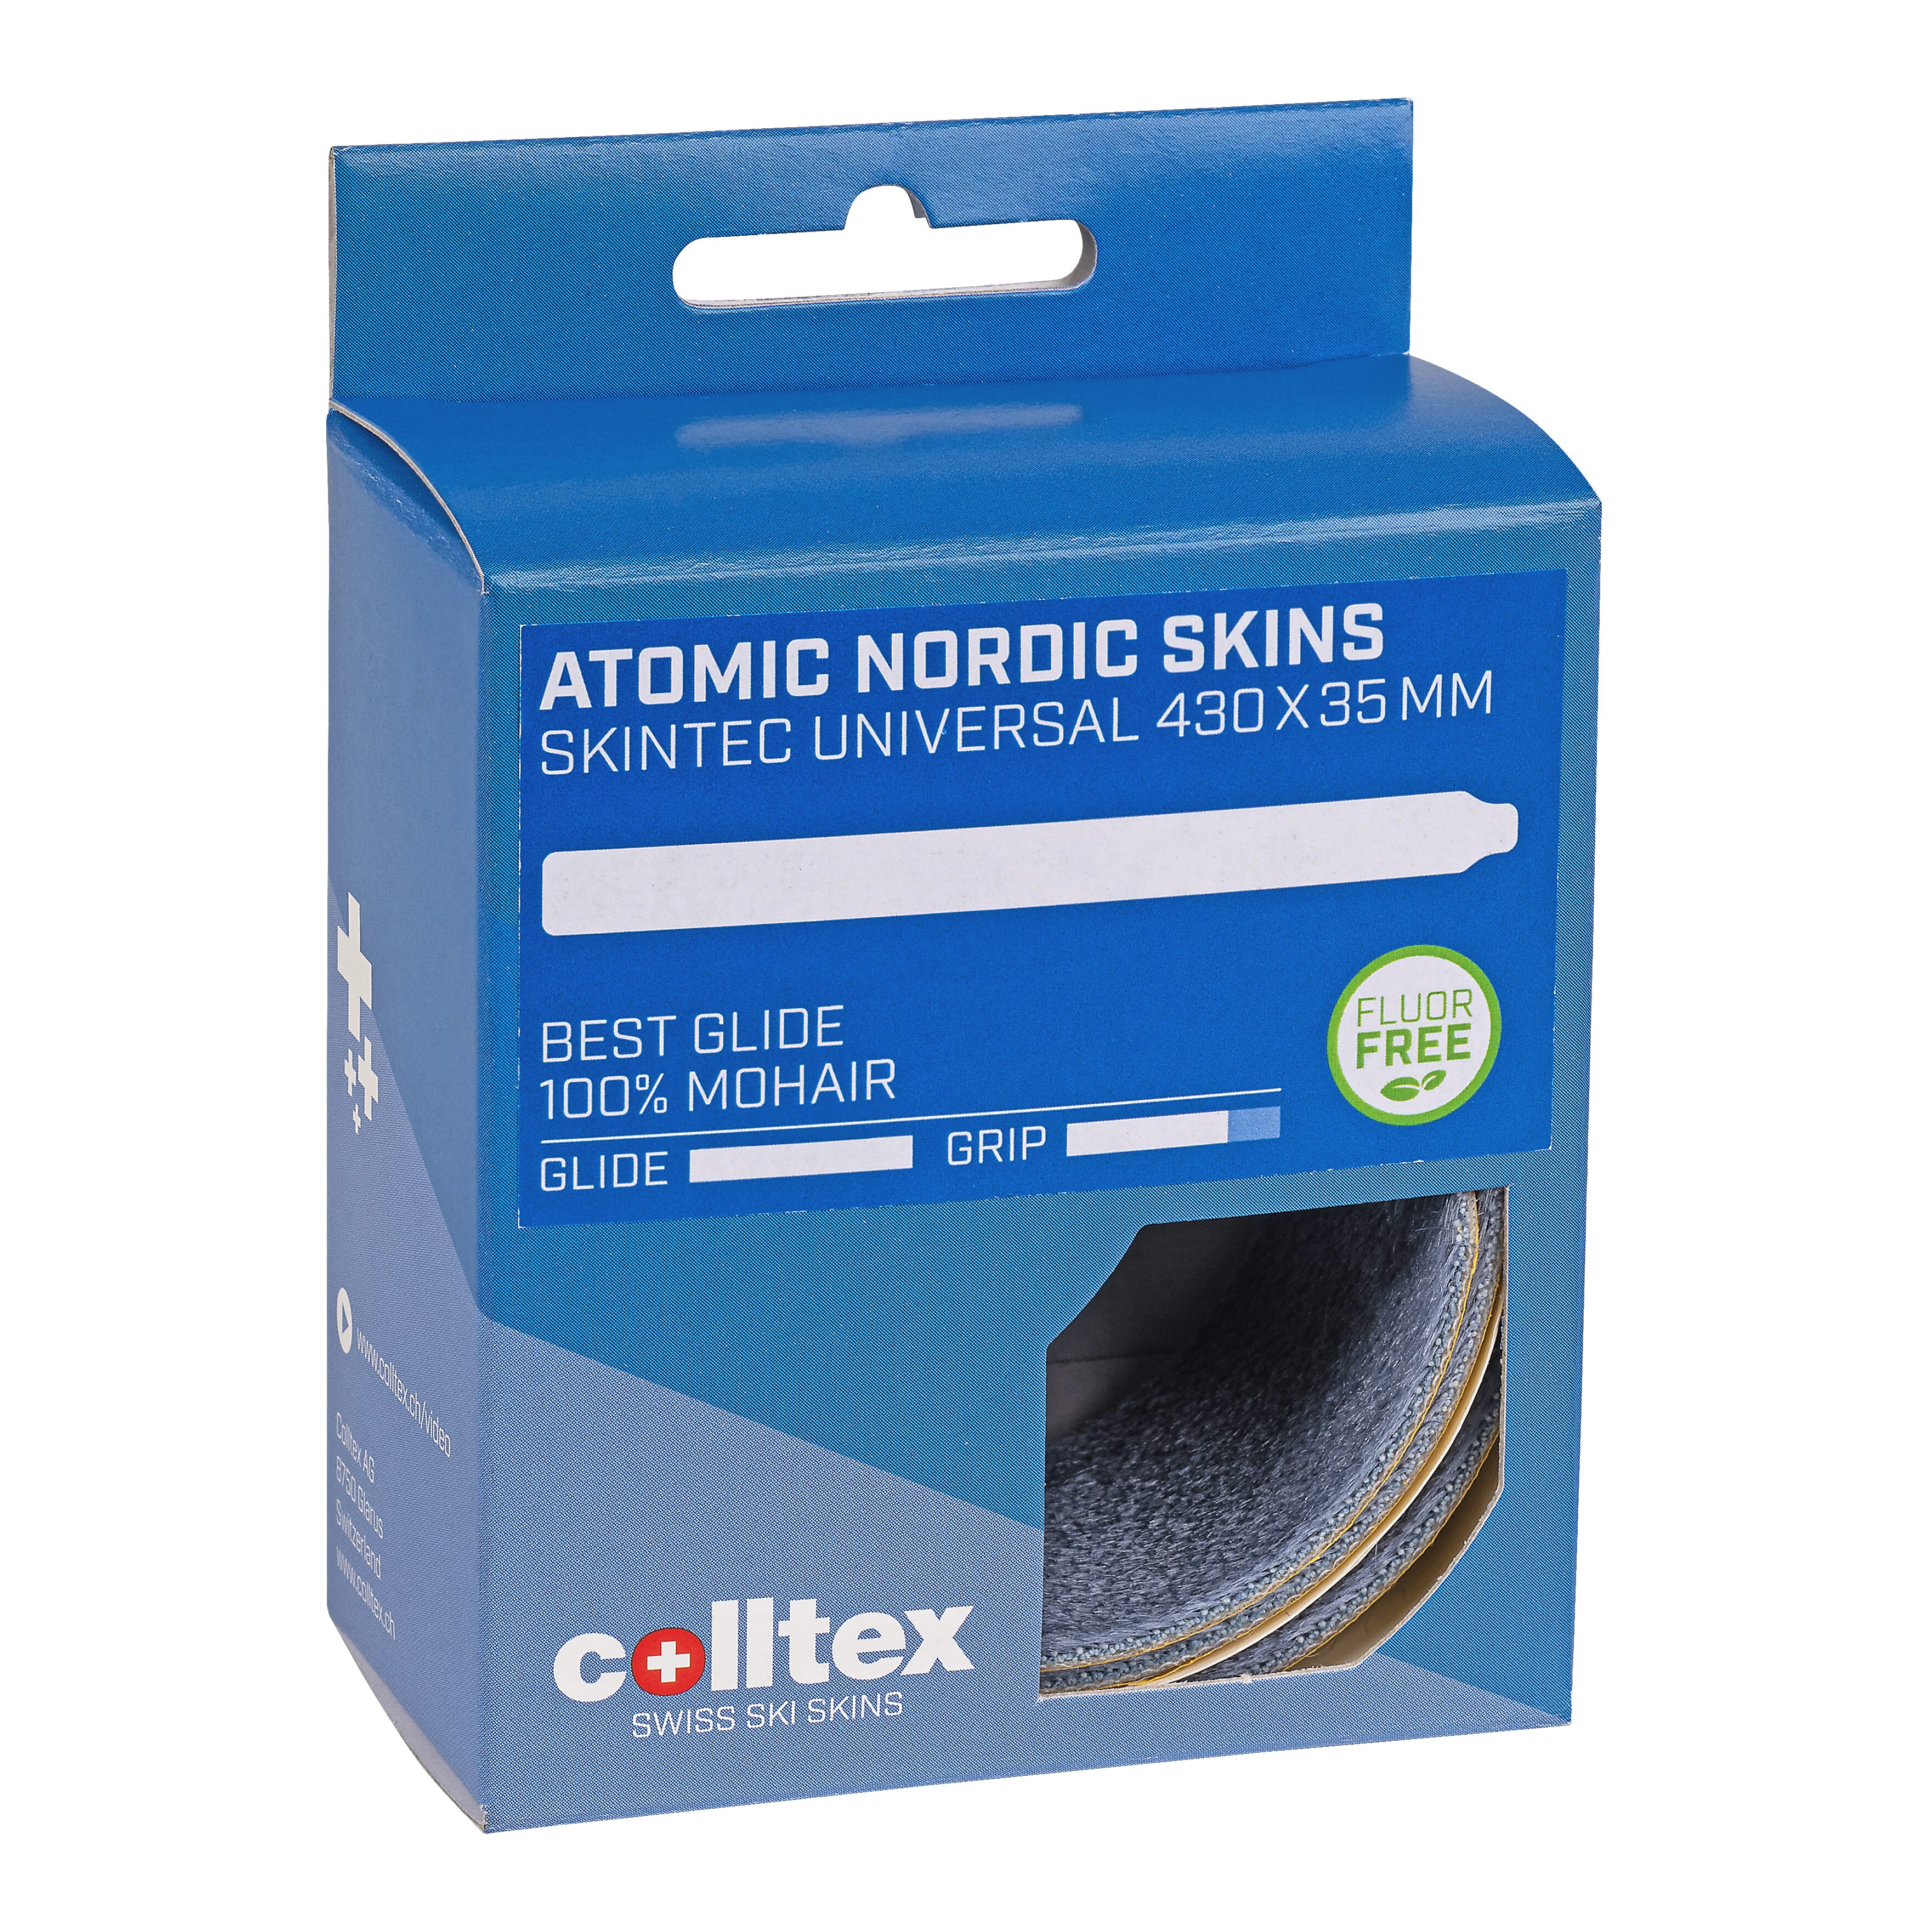 Colltex Skifell Atomic Nordic Skins Skintec Universal Best Glide